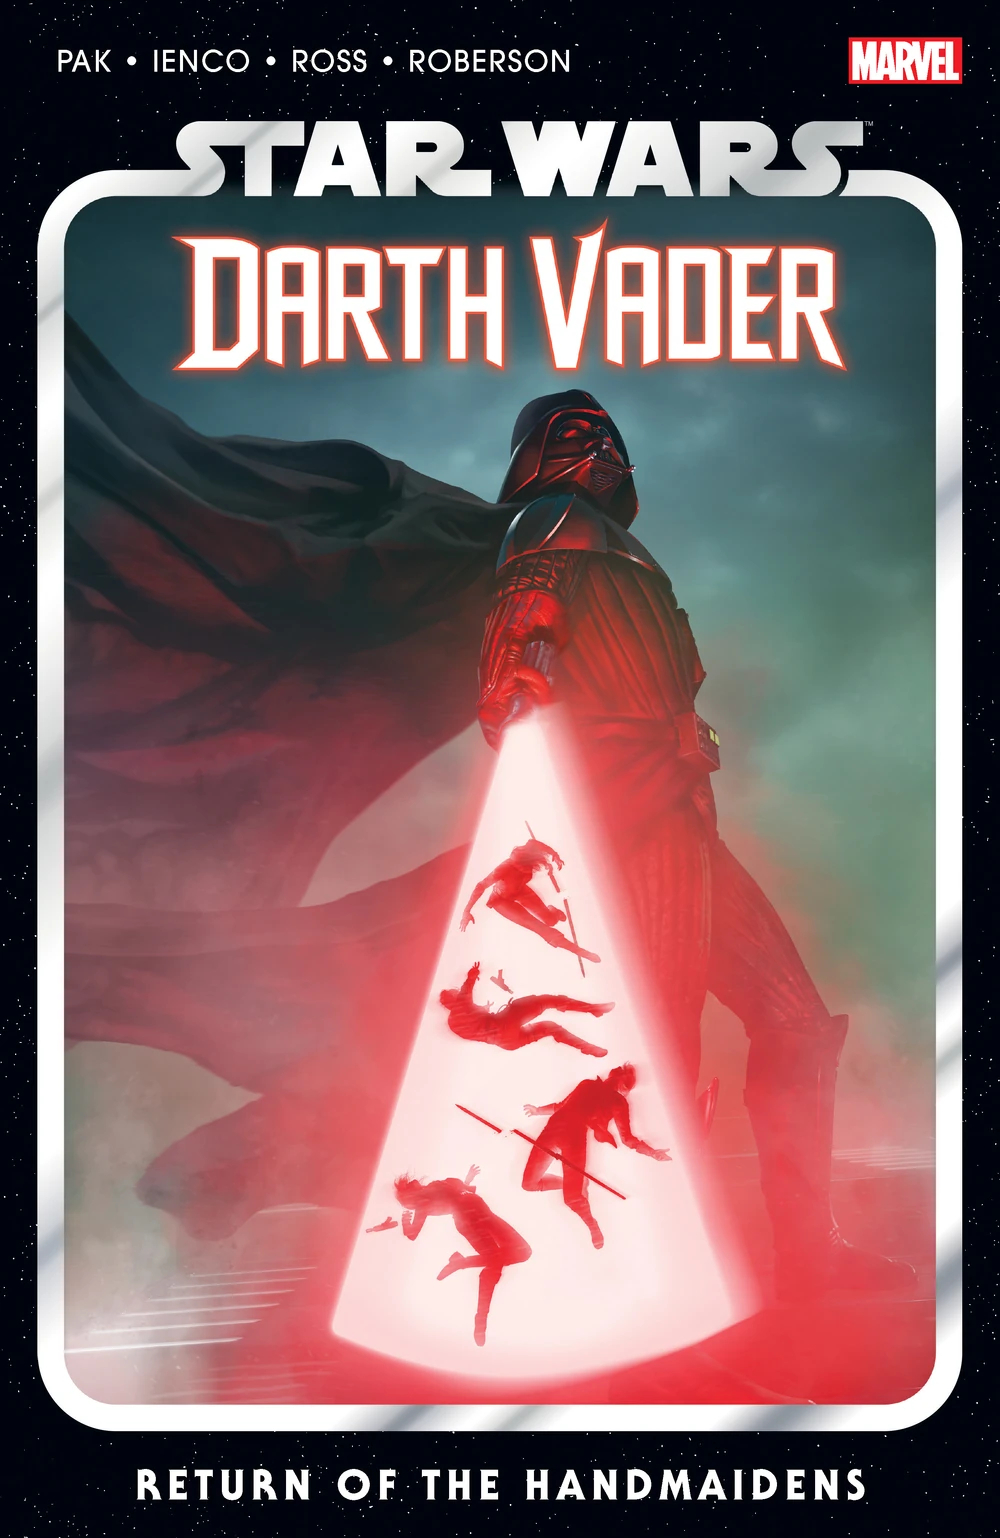 Star Wars: Darth Vader, Vol. 6: Return of the Handmaidens by Greg Pak